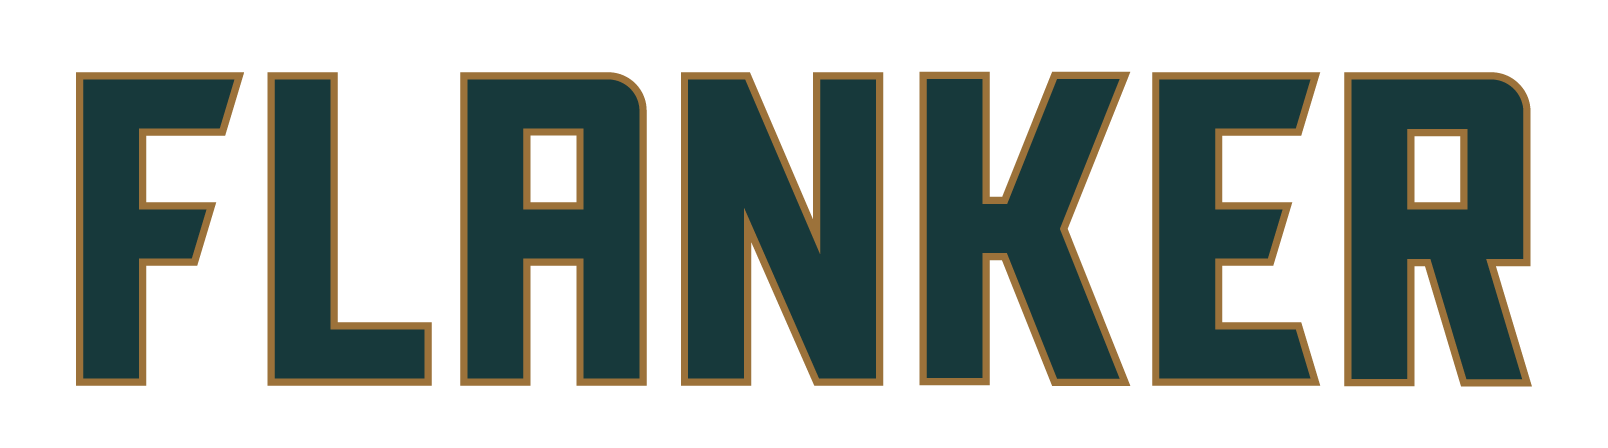 flanker - site logo